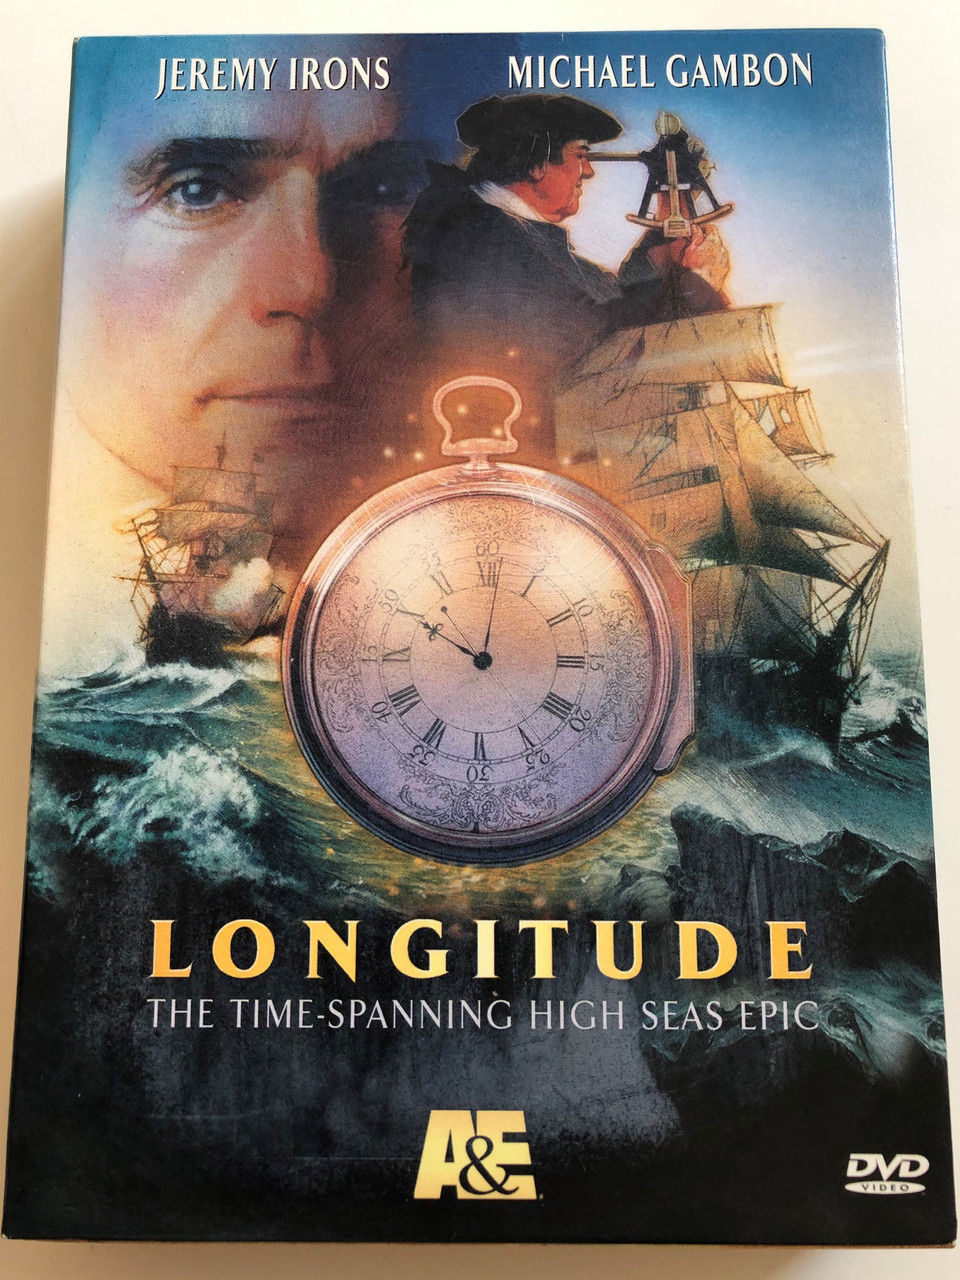 Sea Clocks: The Story of Longitude [Book]